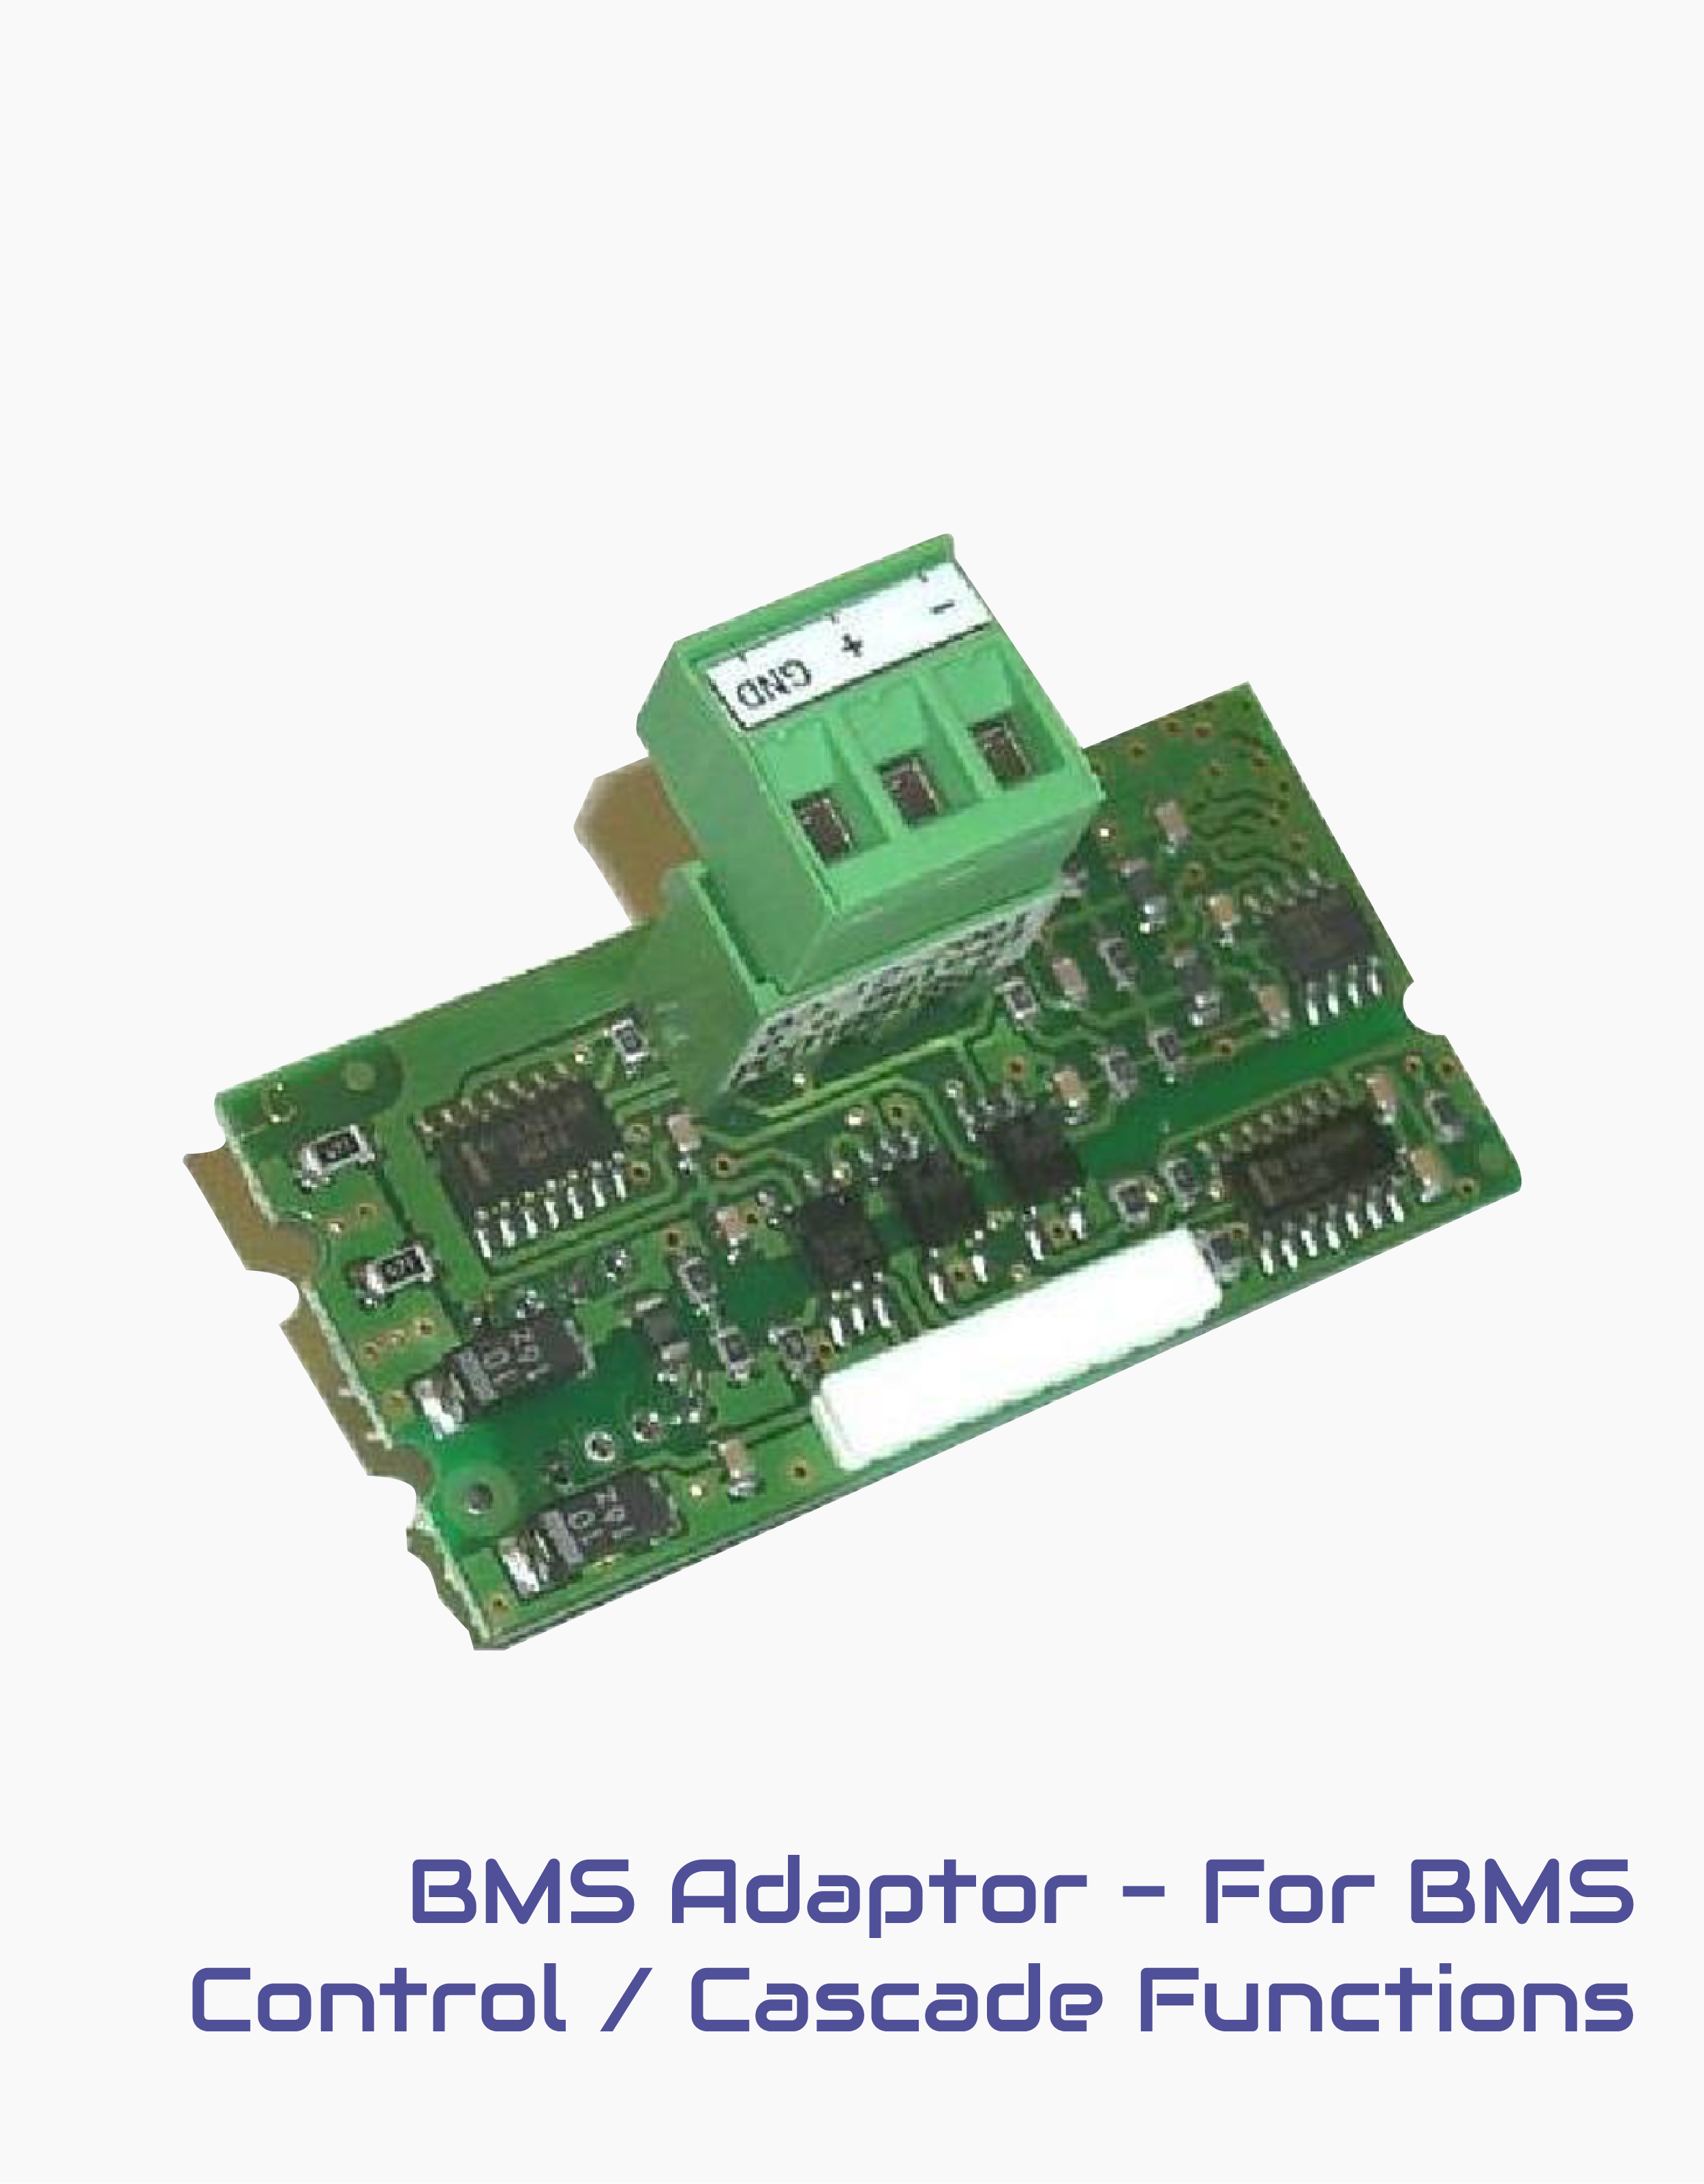 inverTech BMS Card - For Cascading / BMS Control - CE-iVTBMS- Heat Pump Accessories - Cool Energy Shop